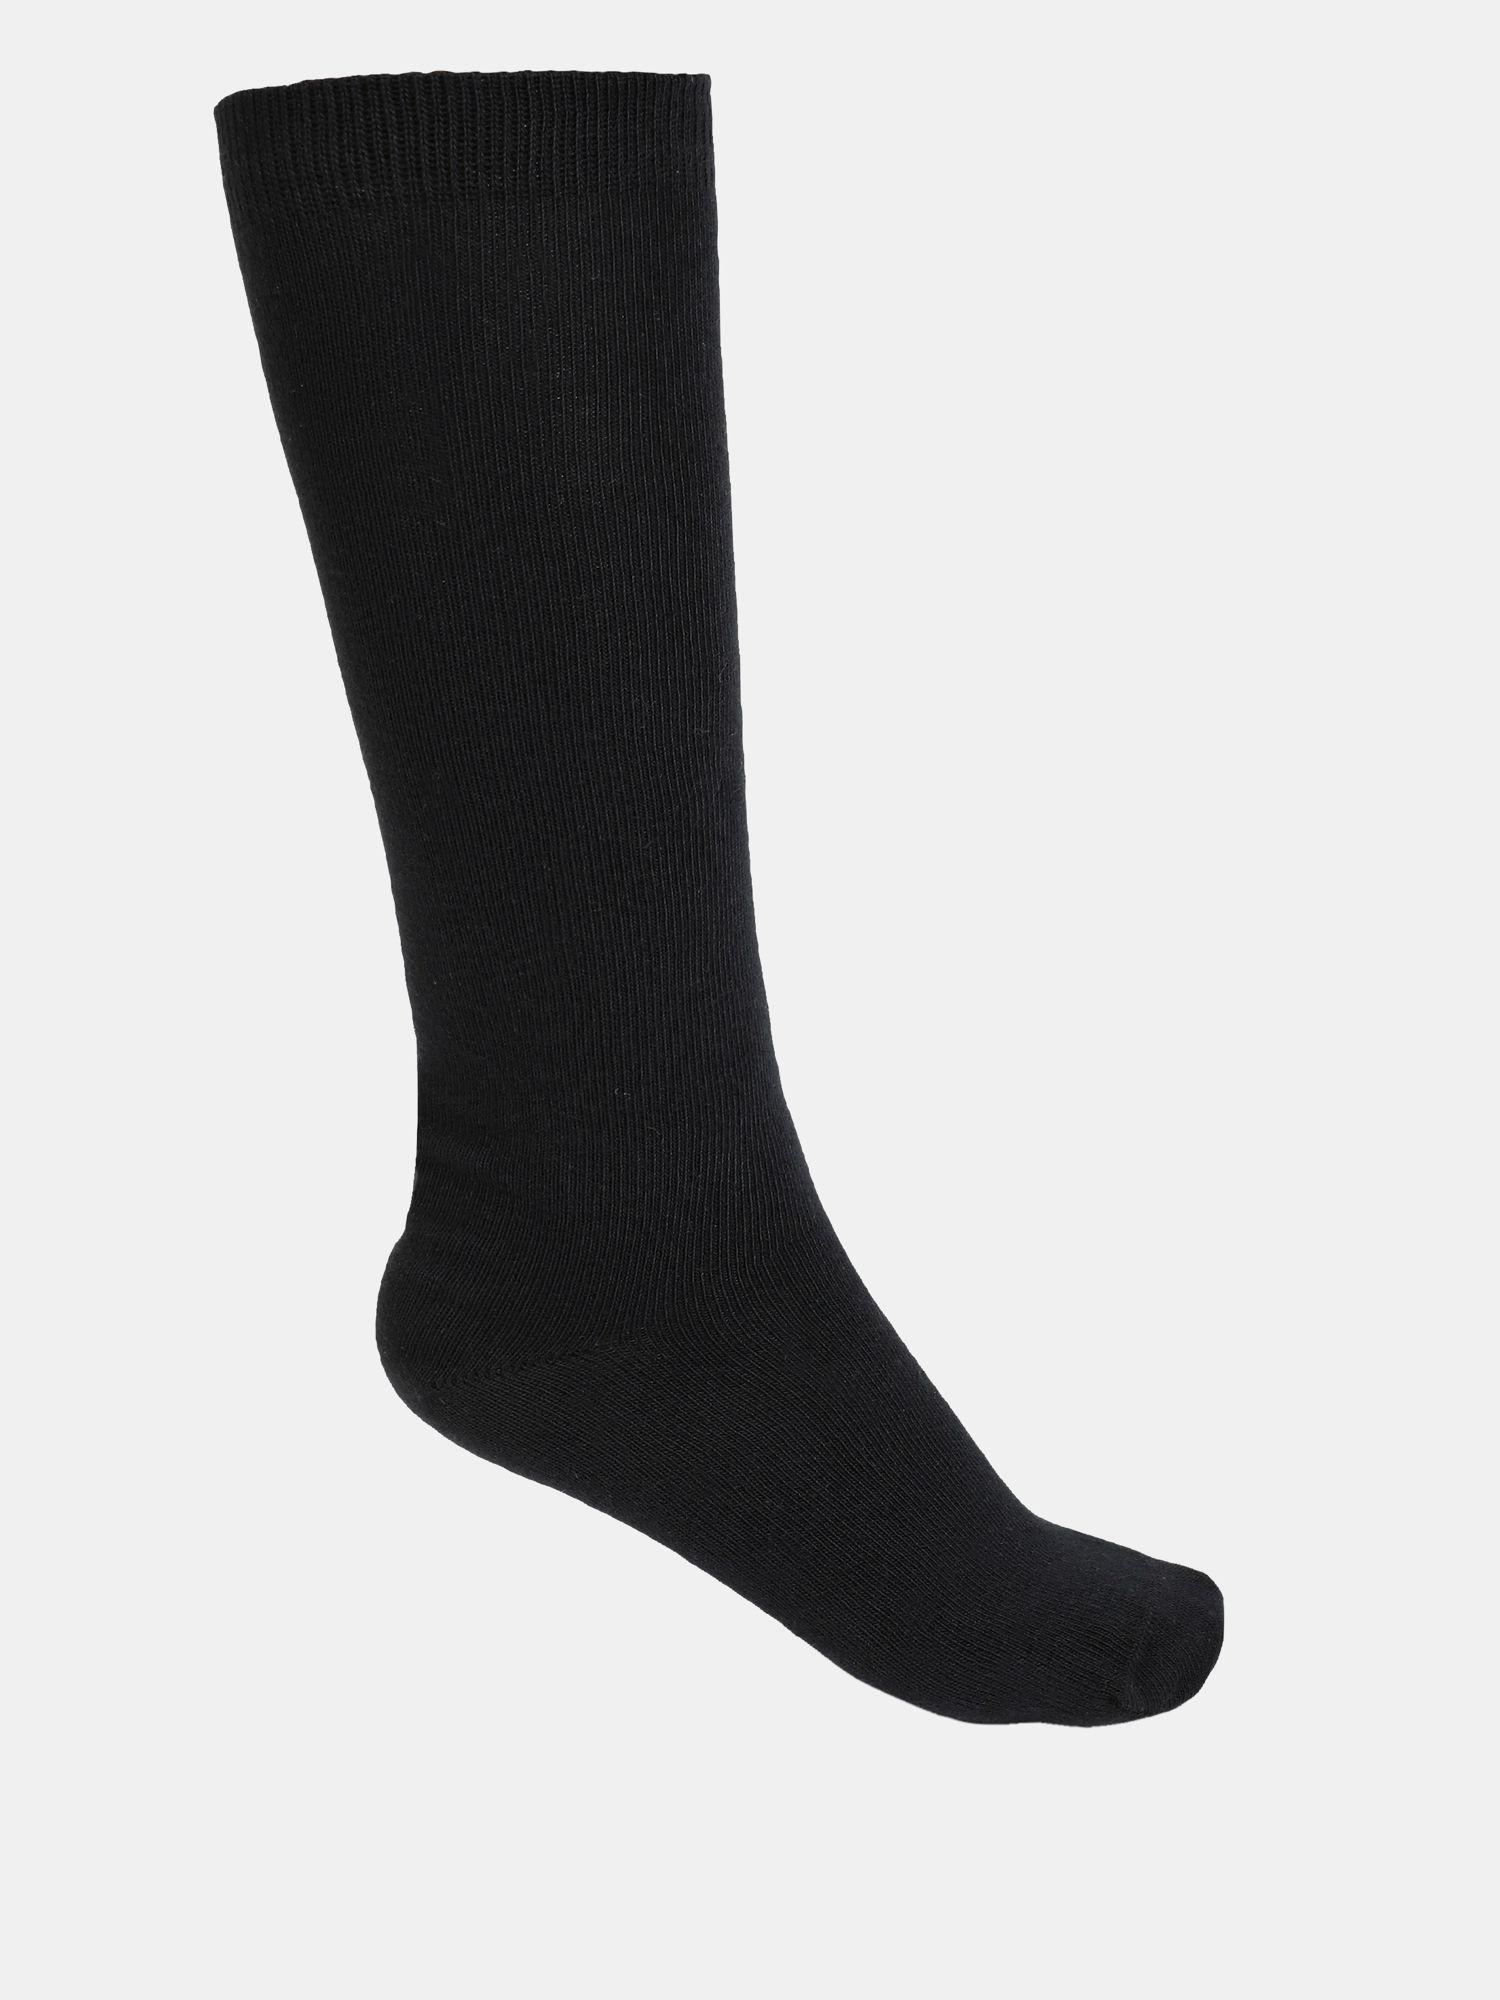 7902 Unisex Cotton Nylon Stretch Knee Length Socks - Black